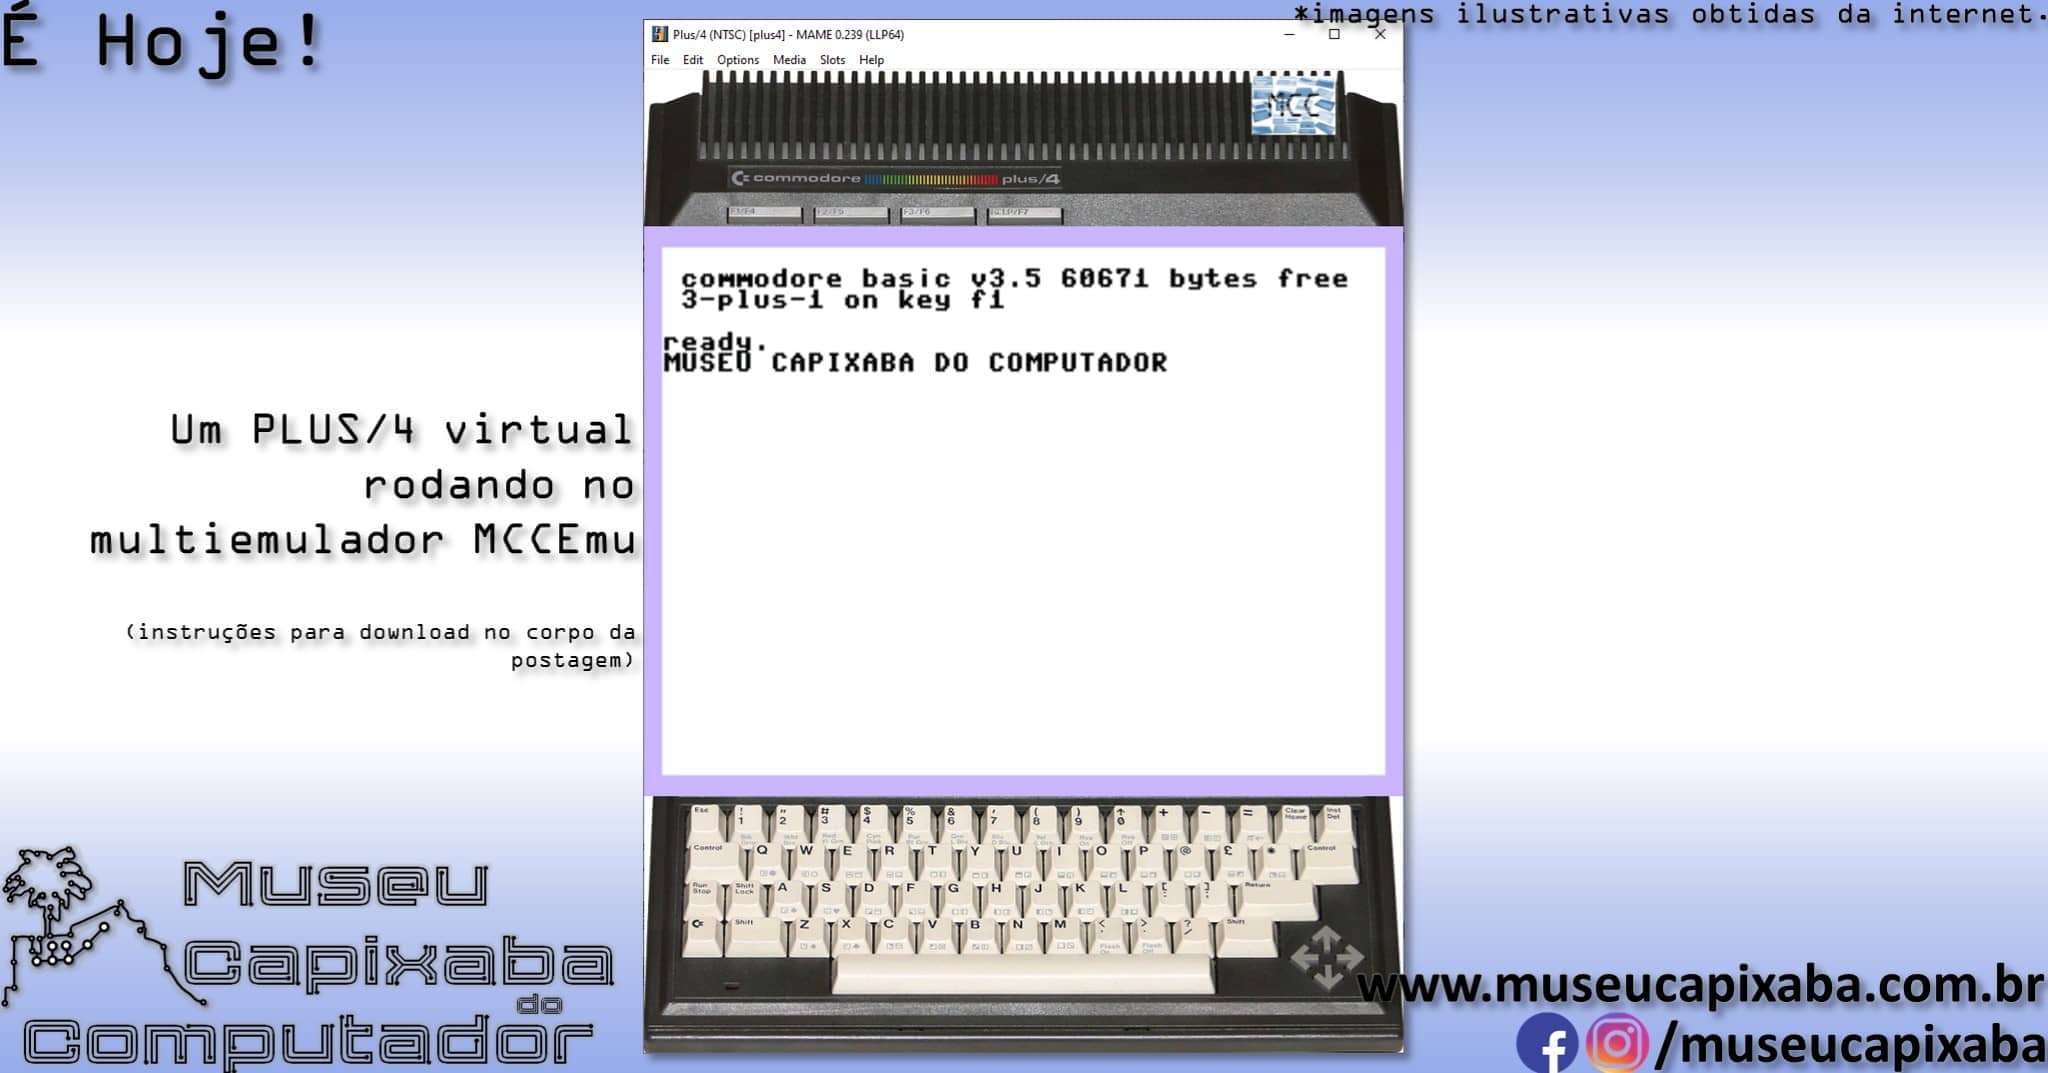 Commodore Plus/4 lancado 5